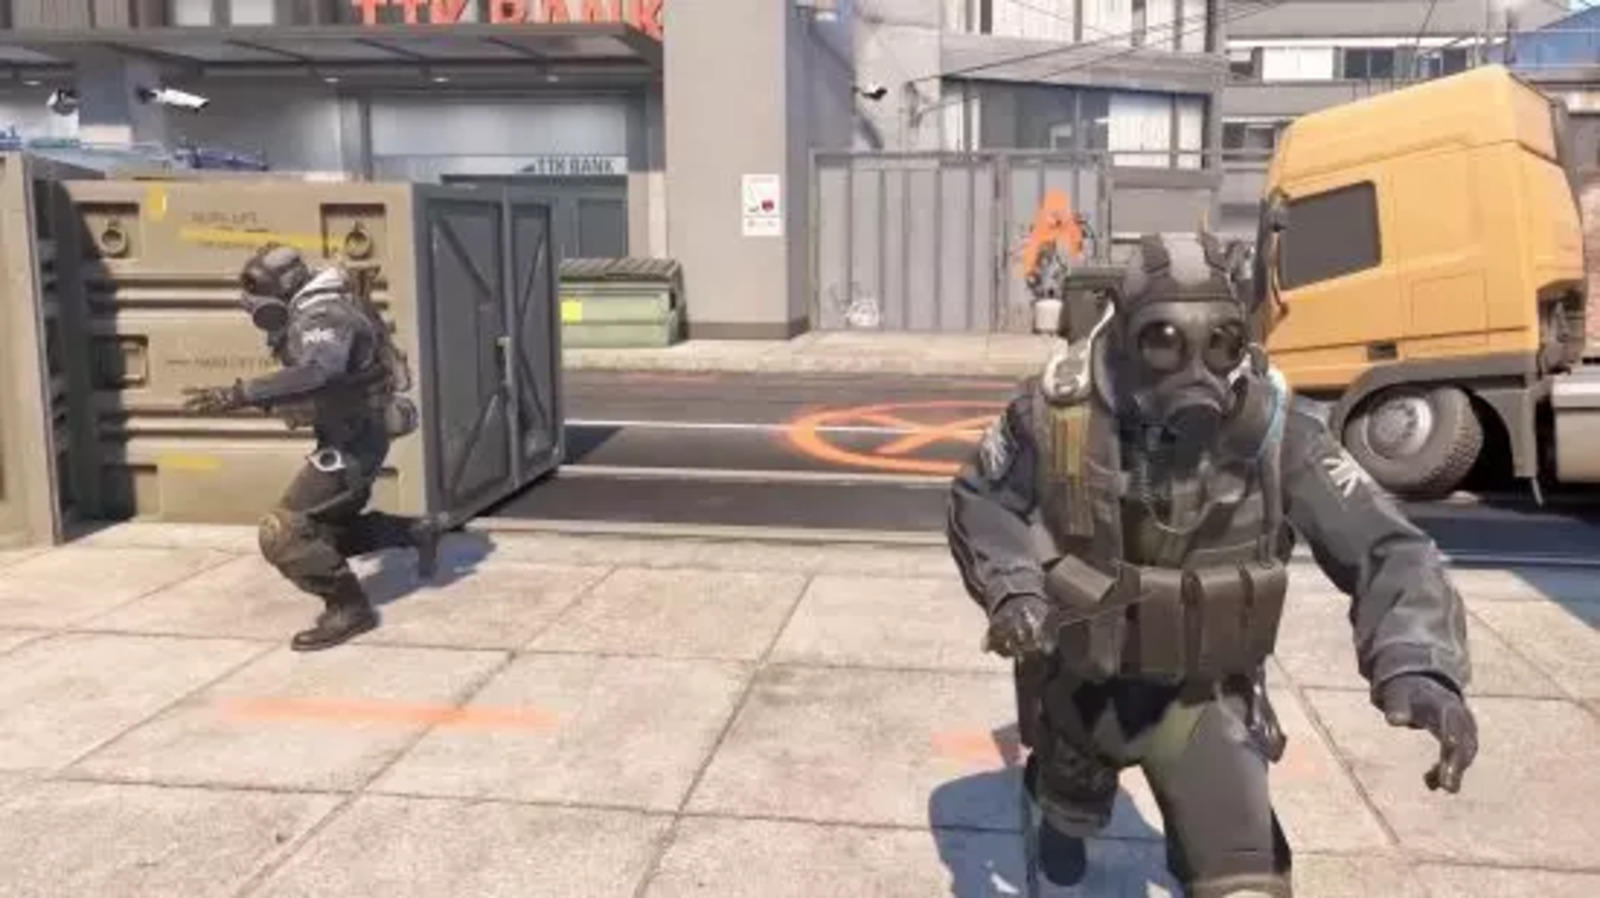 Counter-Strike 2 (CS2): Everything We Know So Far!